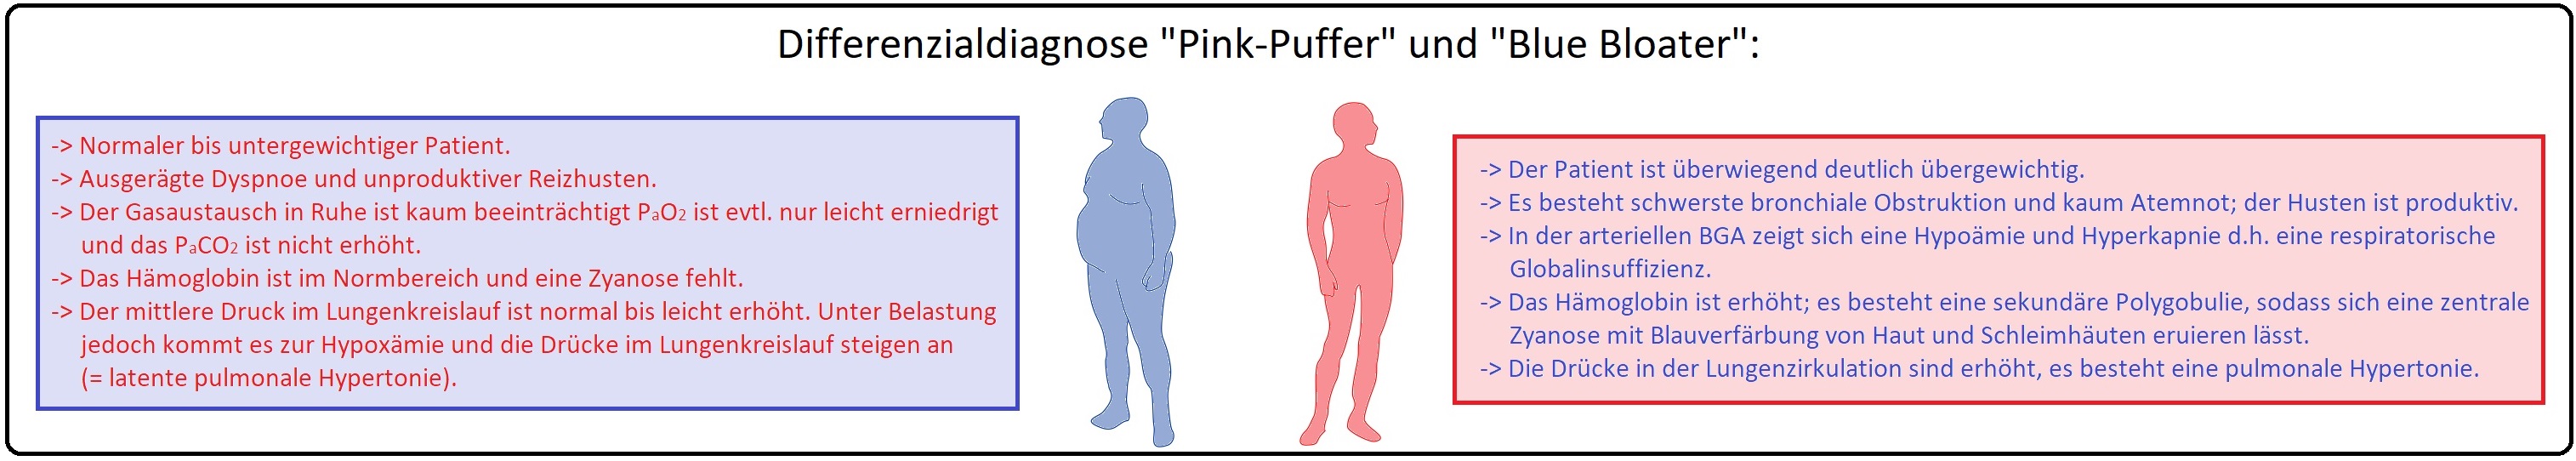 1006 Differenzialdiagnose Pink Puffer und Bue Bloater